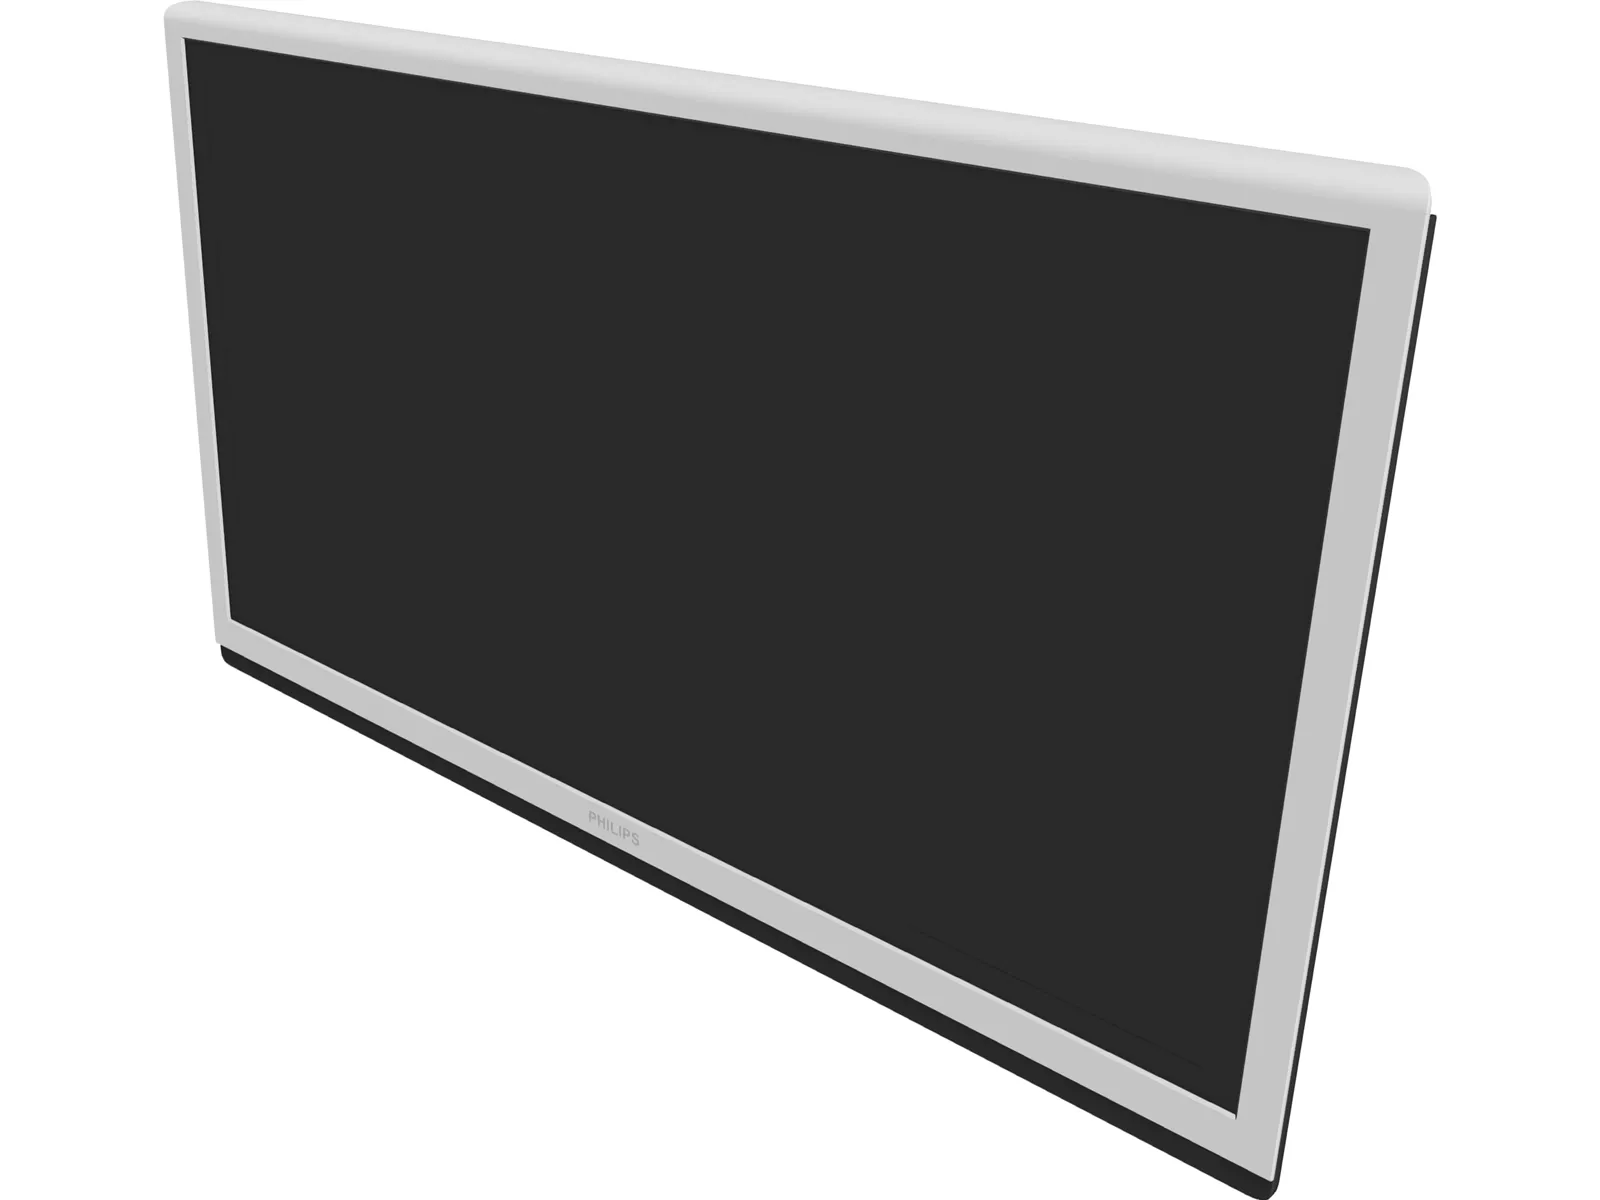 Philips LED TV 42 inch 3D Model (2013) - 3DCADBrowser